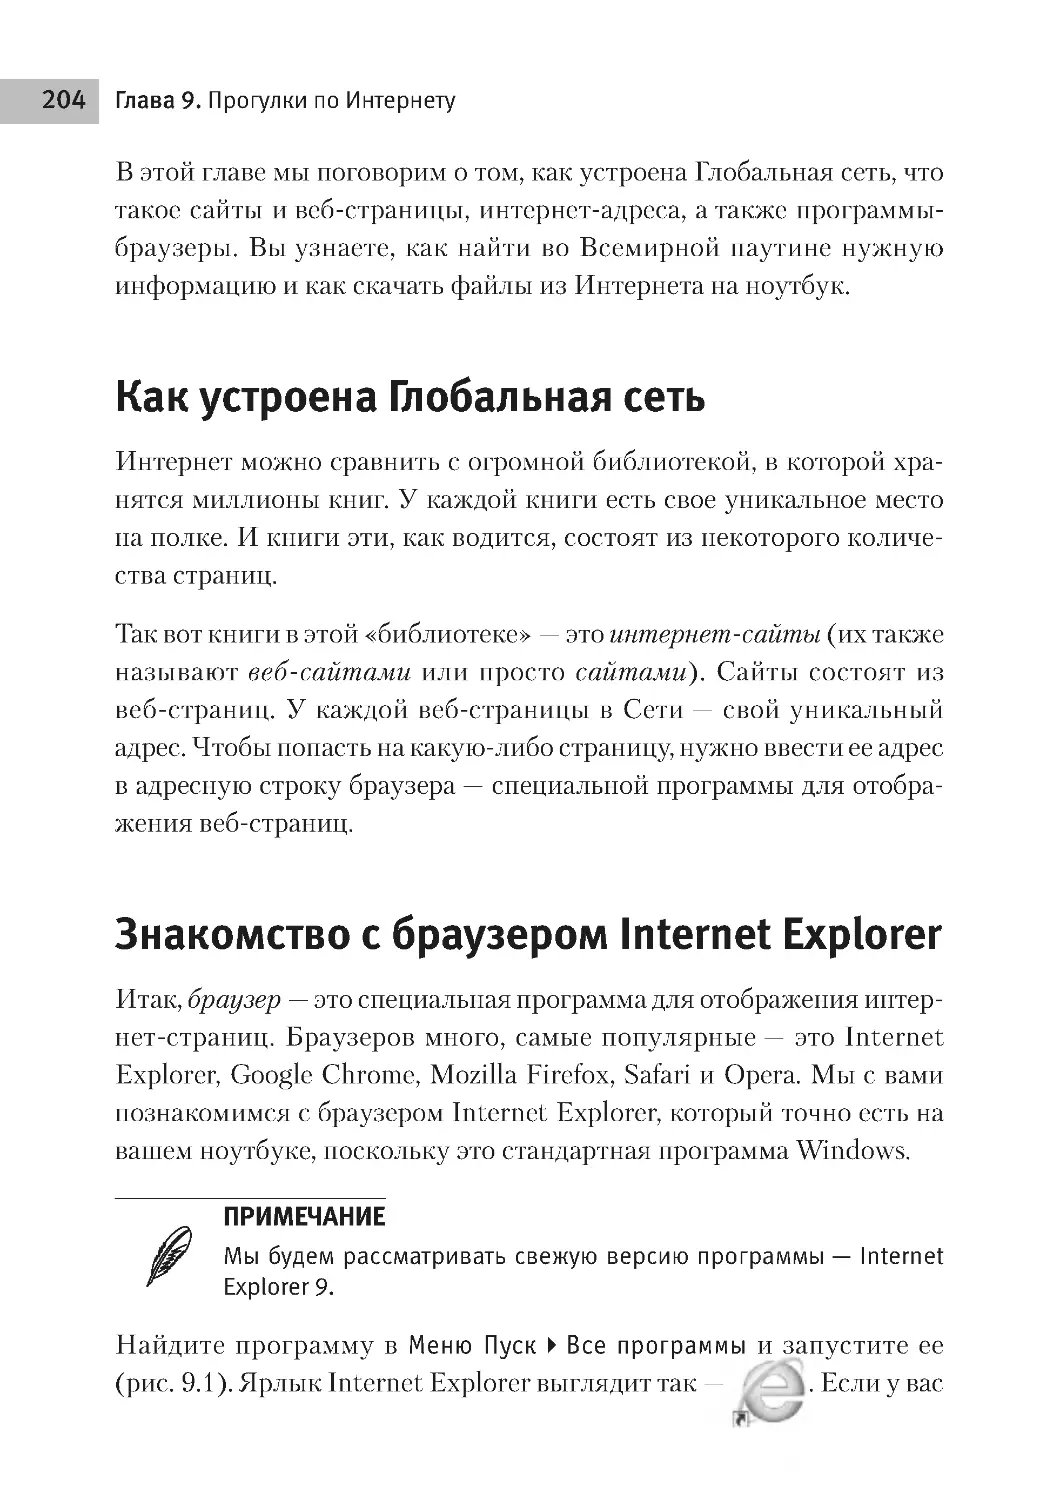 Знакомство с браузером Internet Explorer